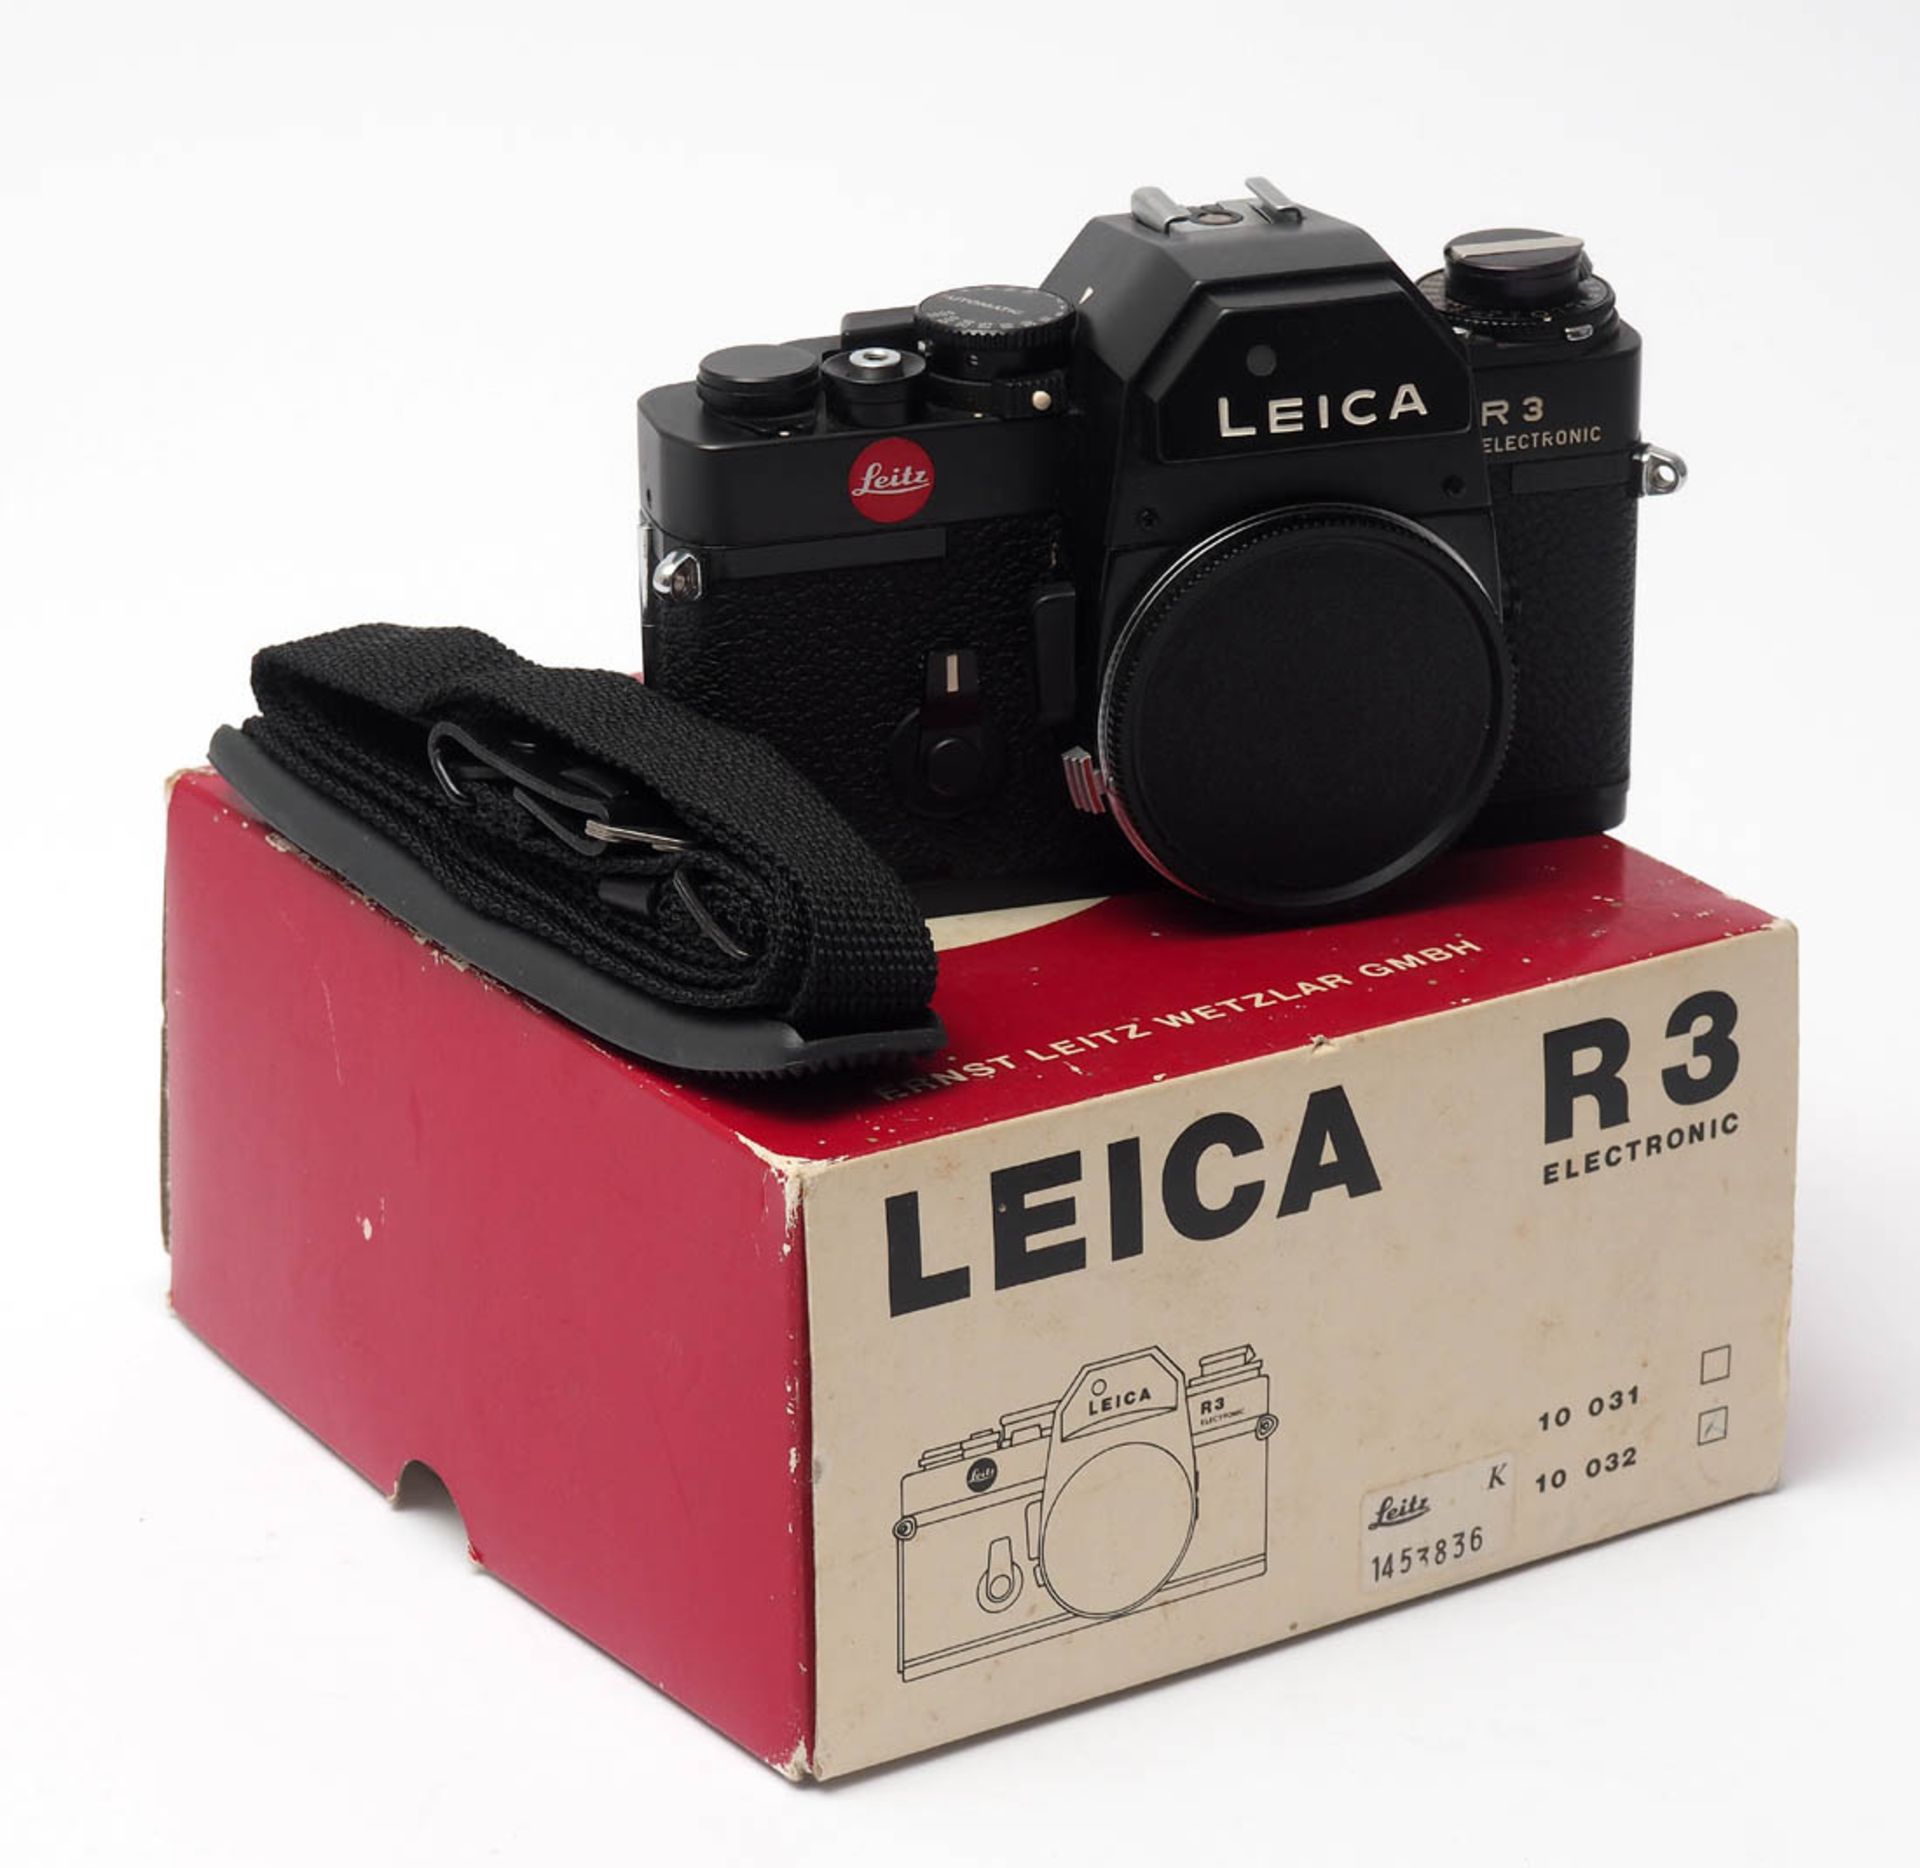 Kamera, Leica R3 electronic Im Originalkarton, mit Tragegurt.